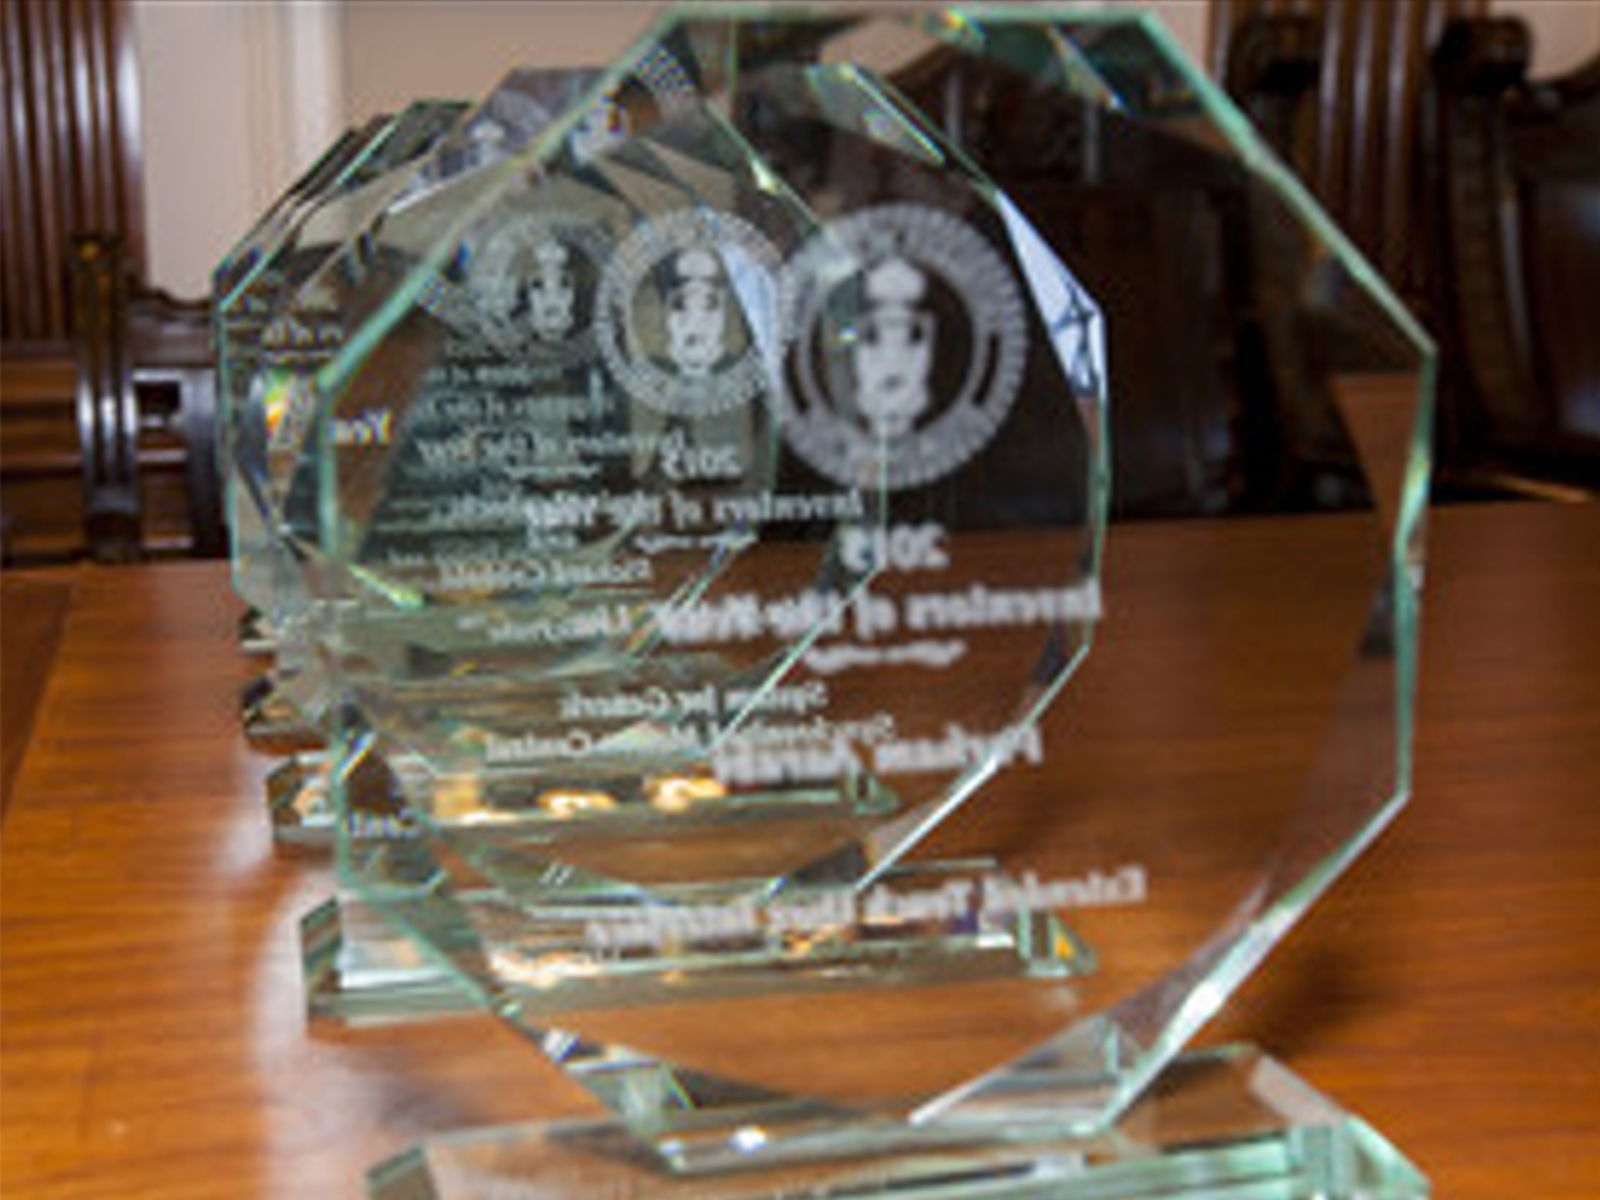 Award trophies displayed on a desk.